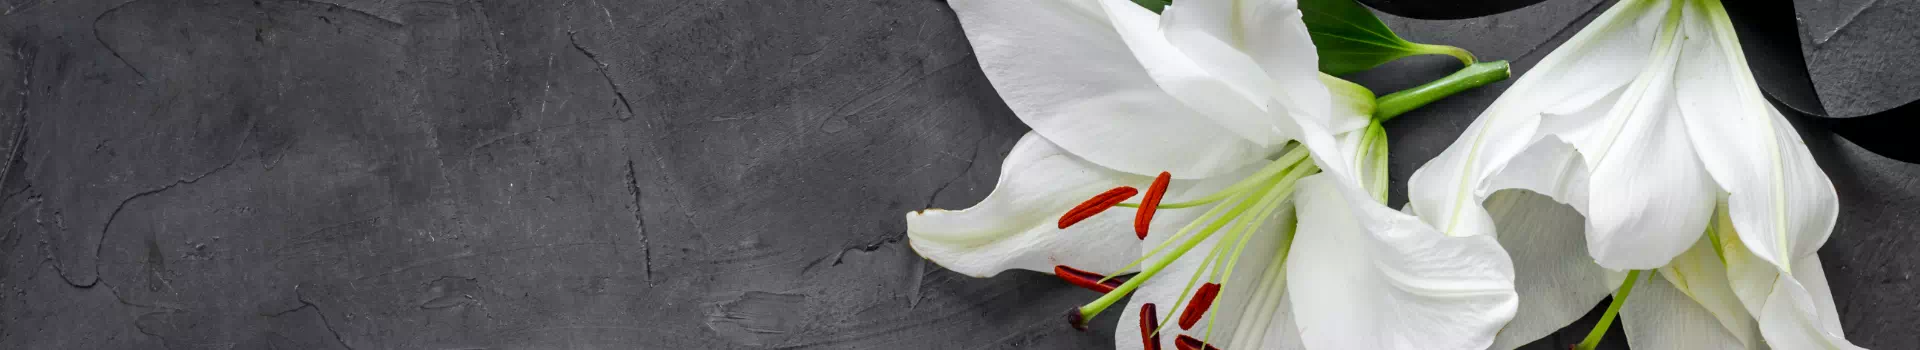 biała lilia na marmurowym tle